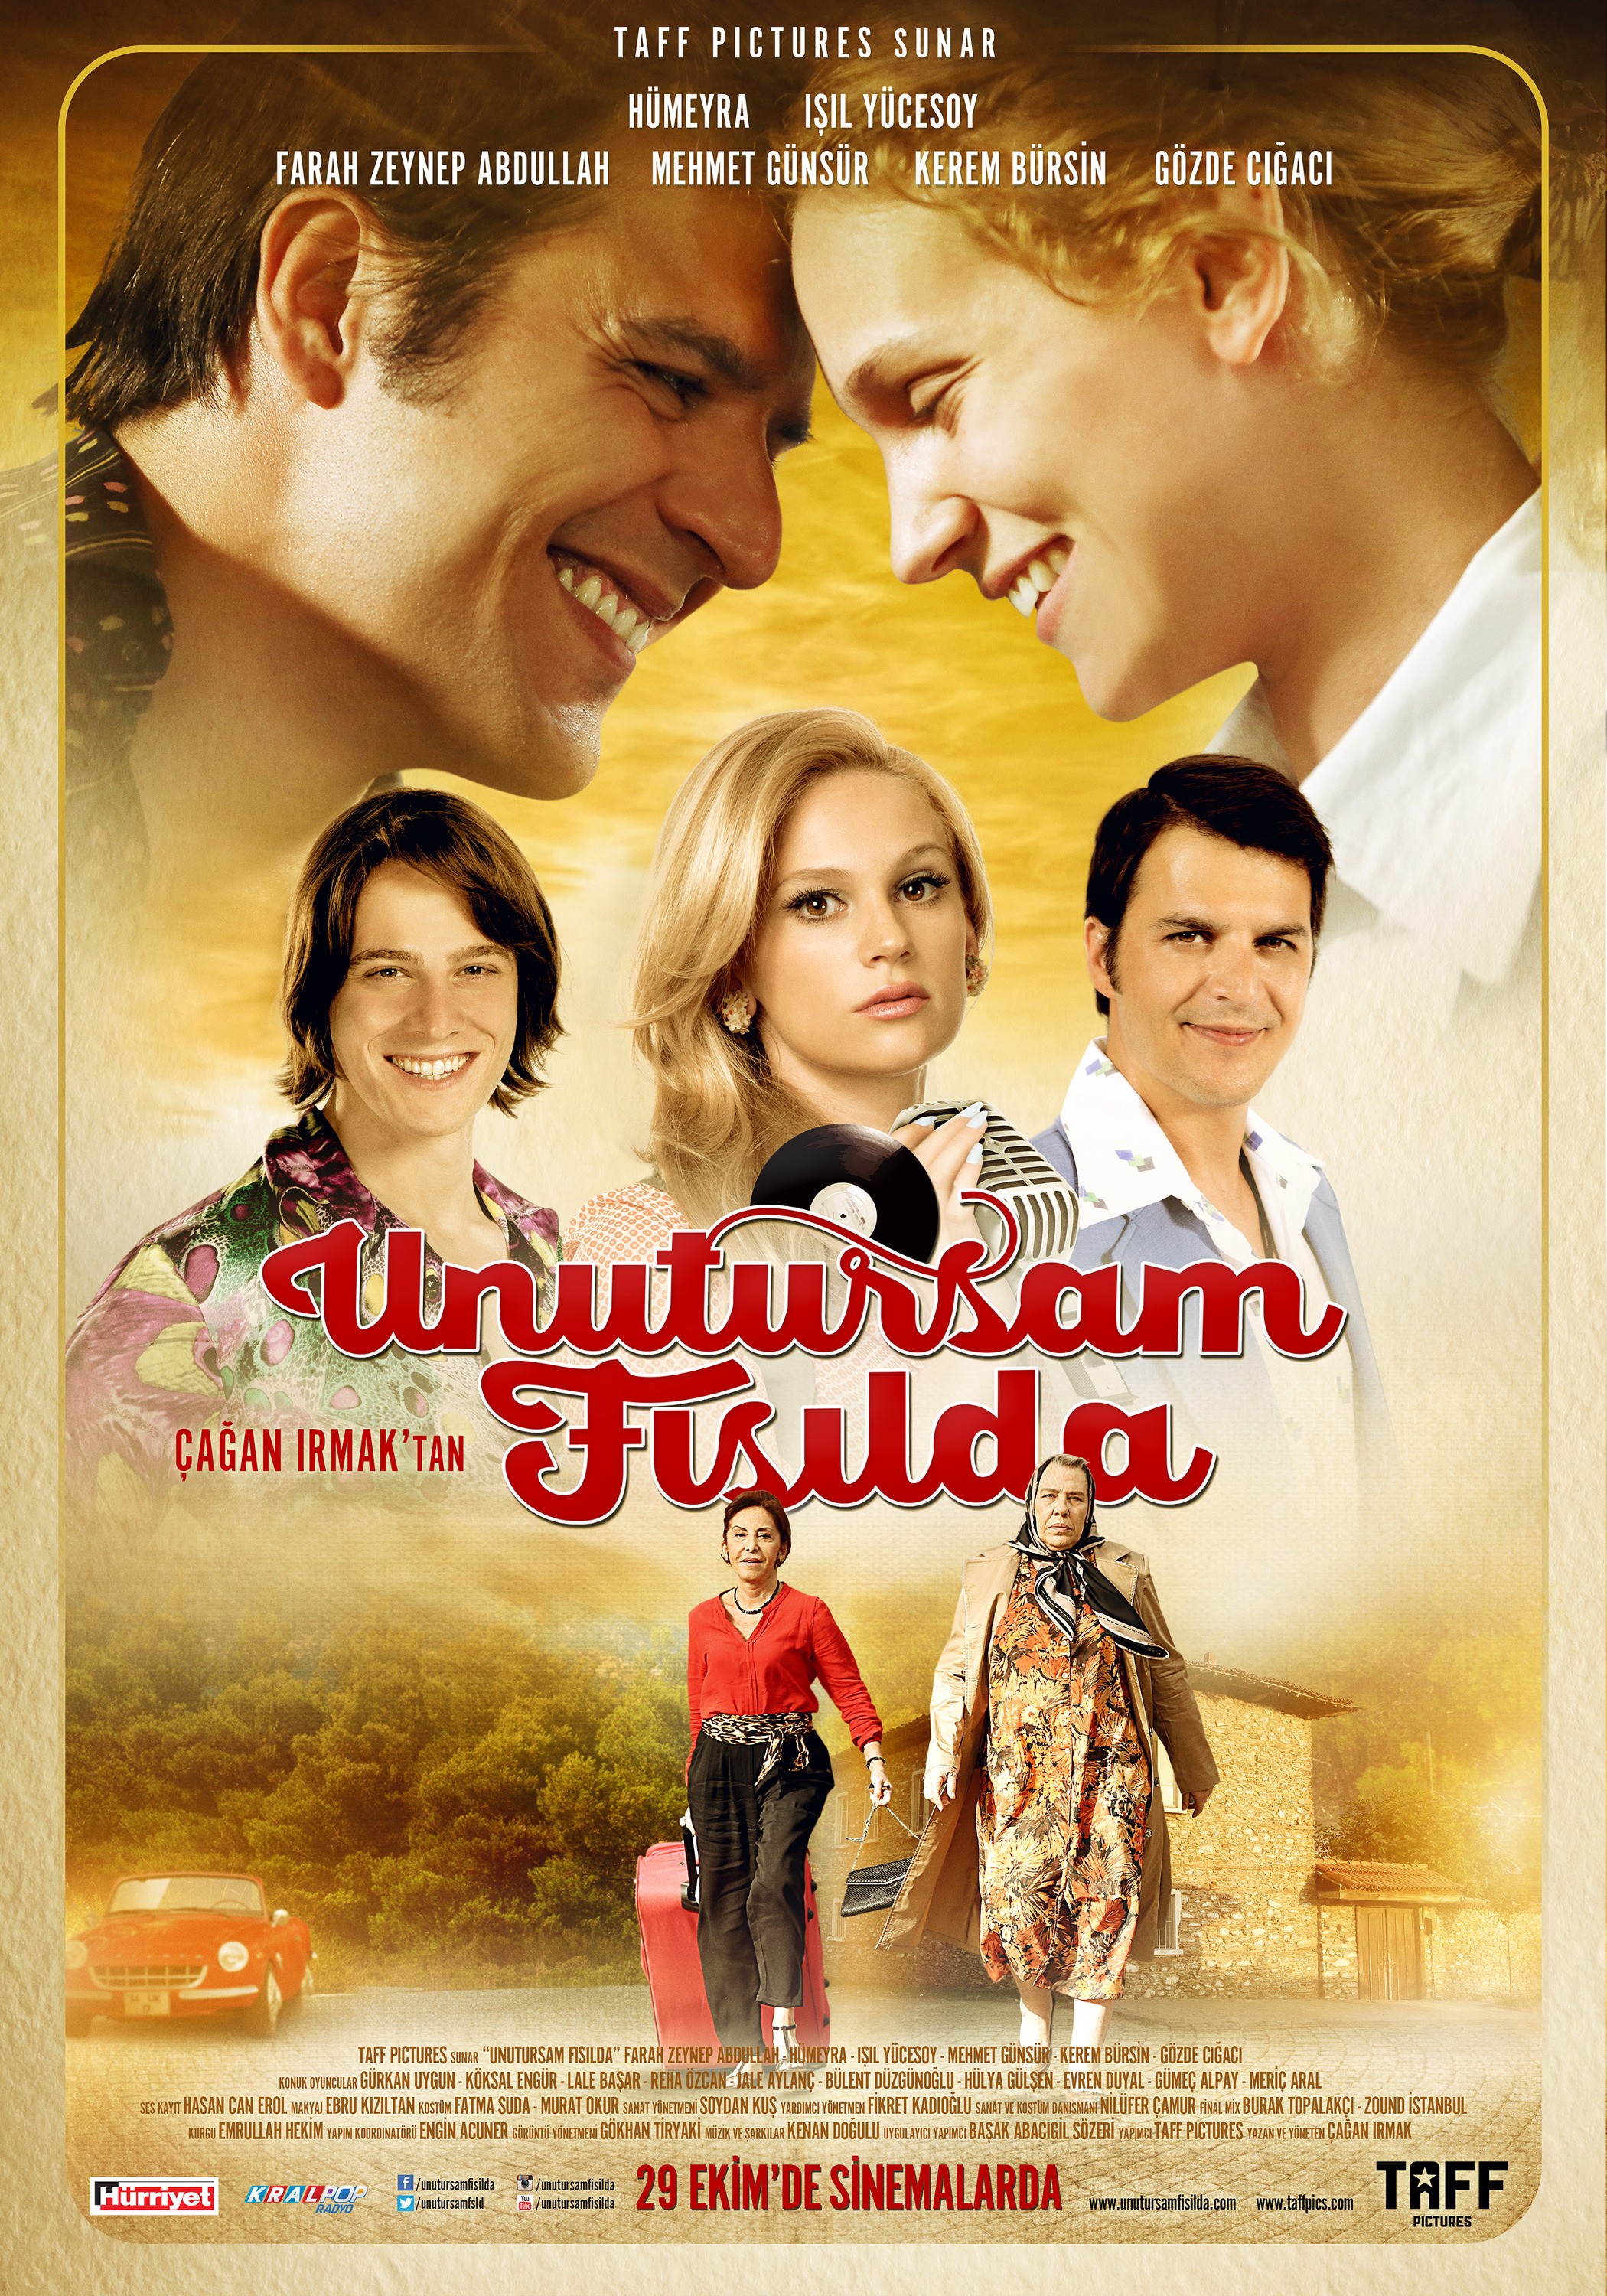 Mega Sized Movie Poster Image for Unutursam Fisilda 